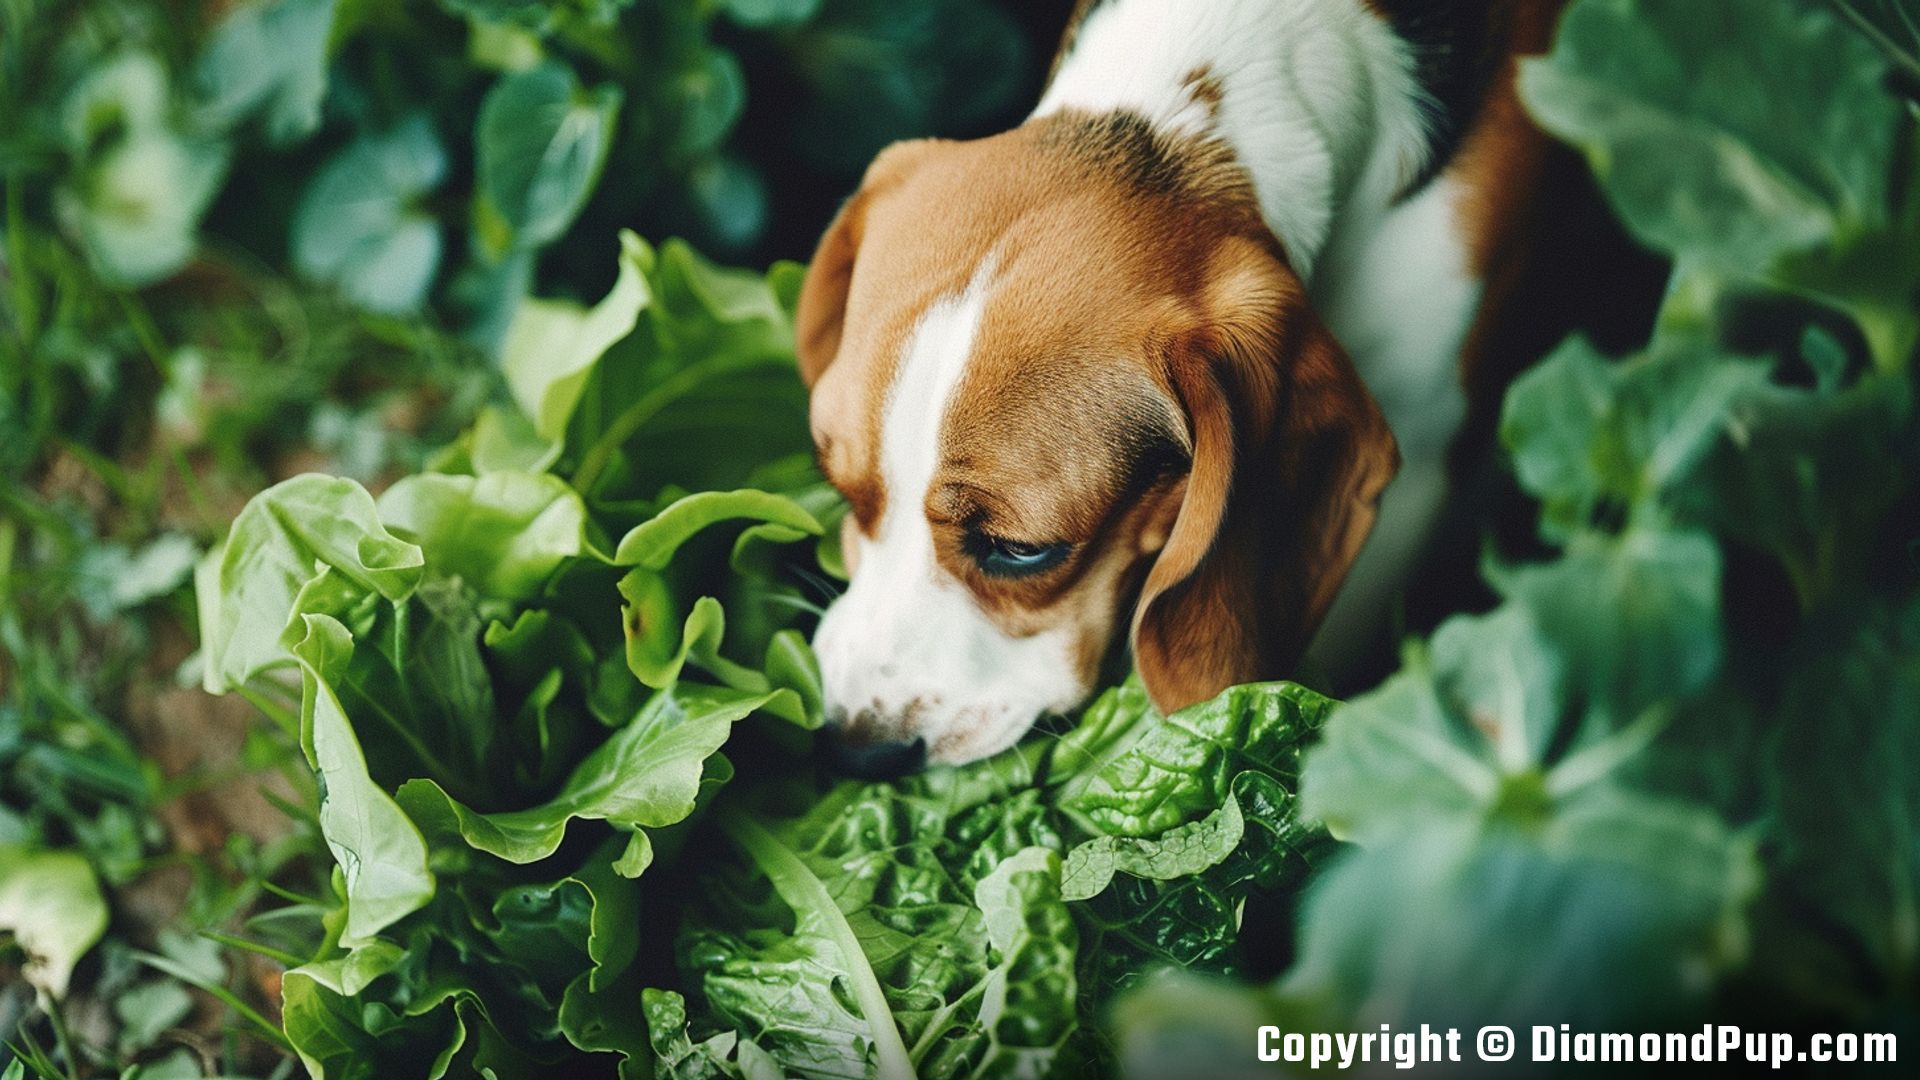 Image of a Cute Beagle Eating Lettuce